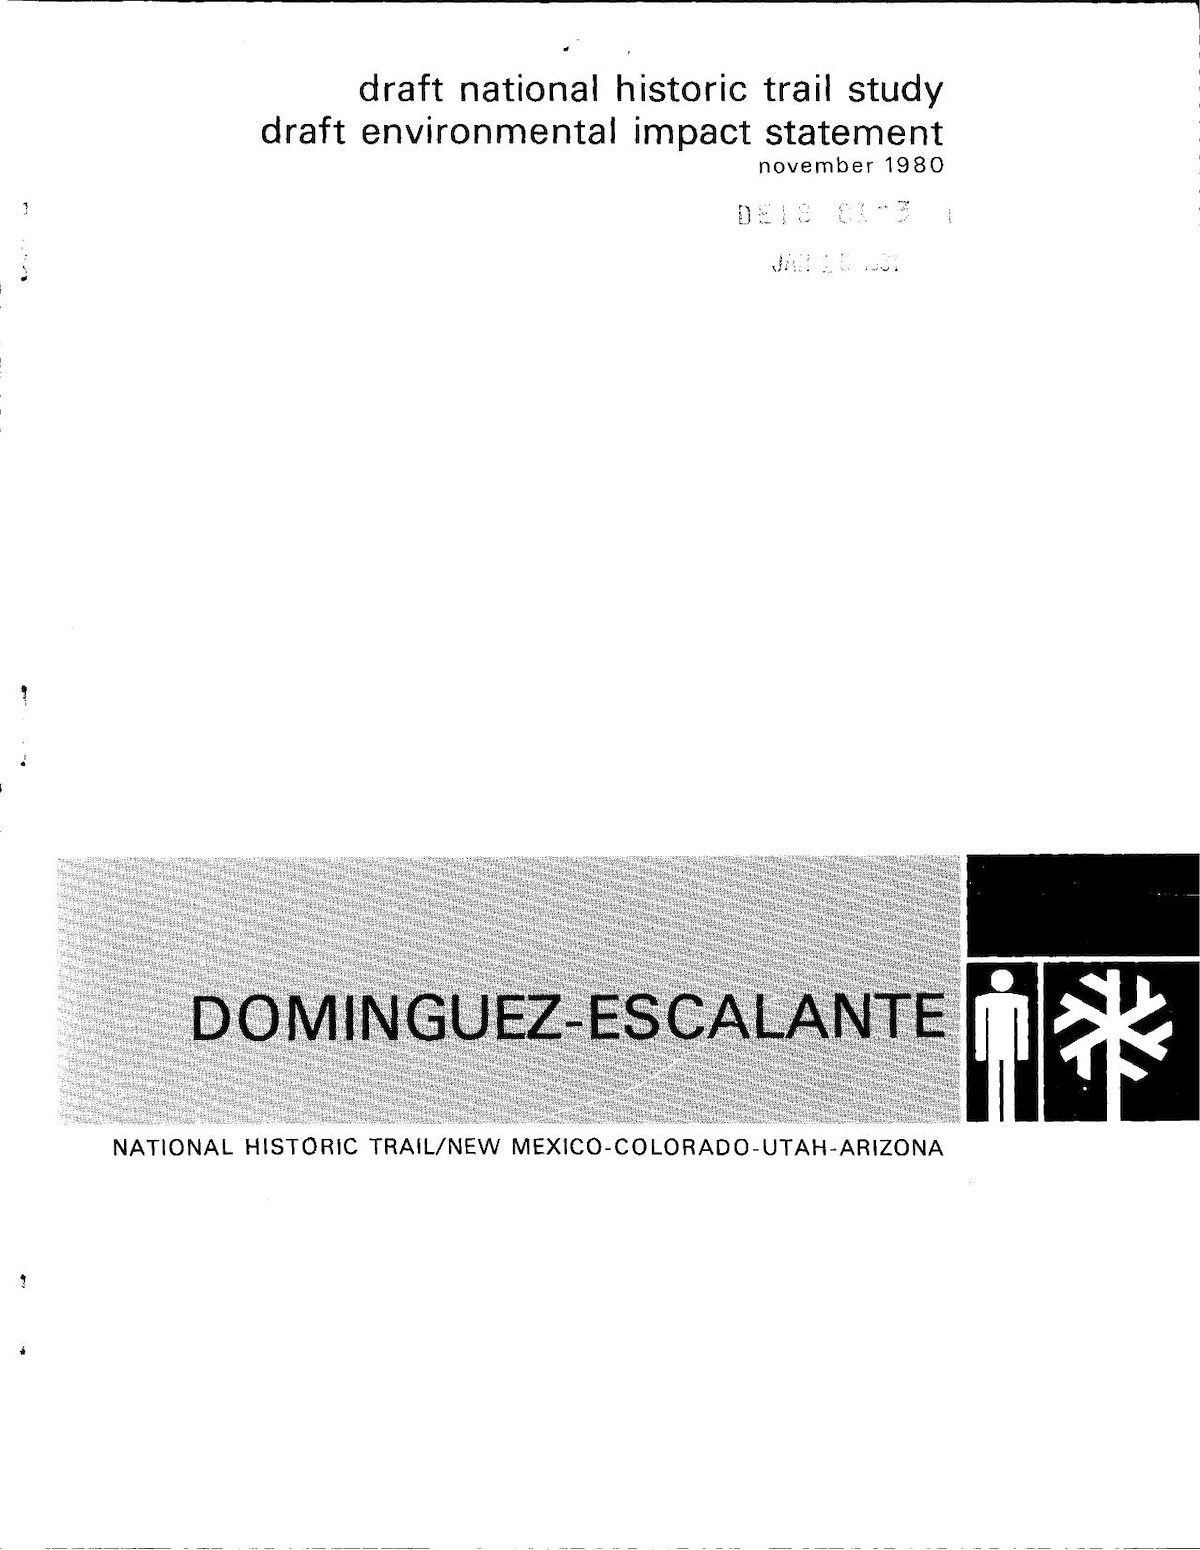 Dominguez-Escalante National Historic Trail, Draft National Historic Trail Study, 1980 Cover Page